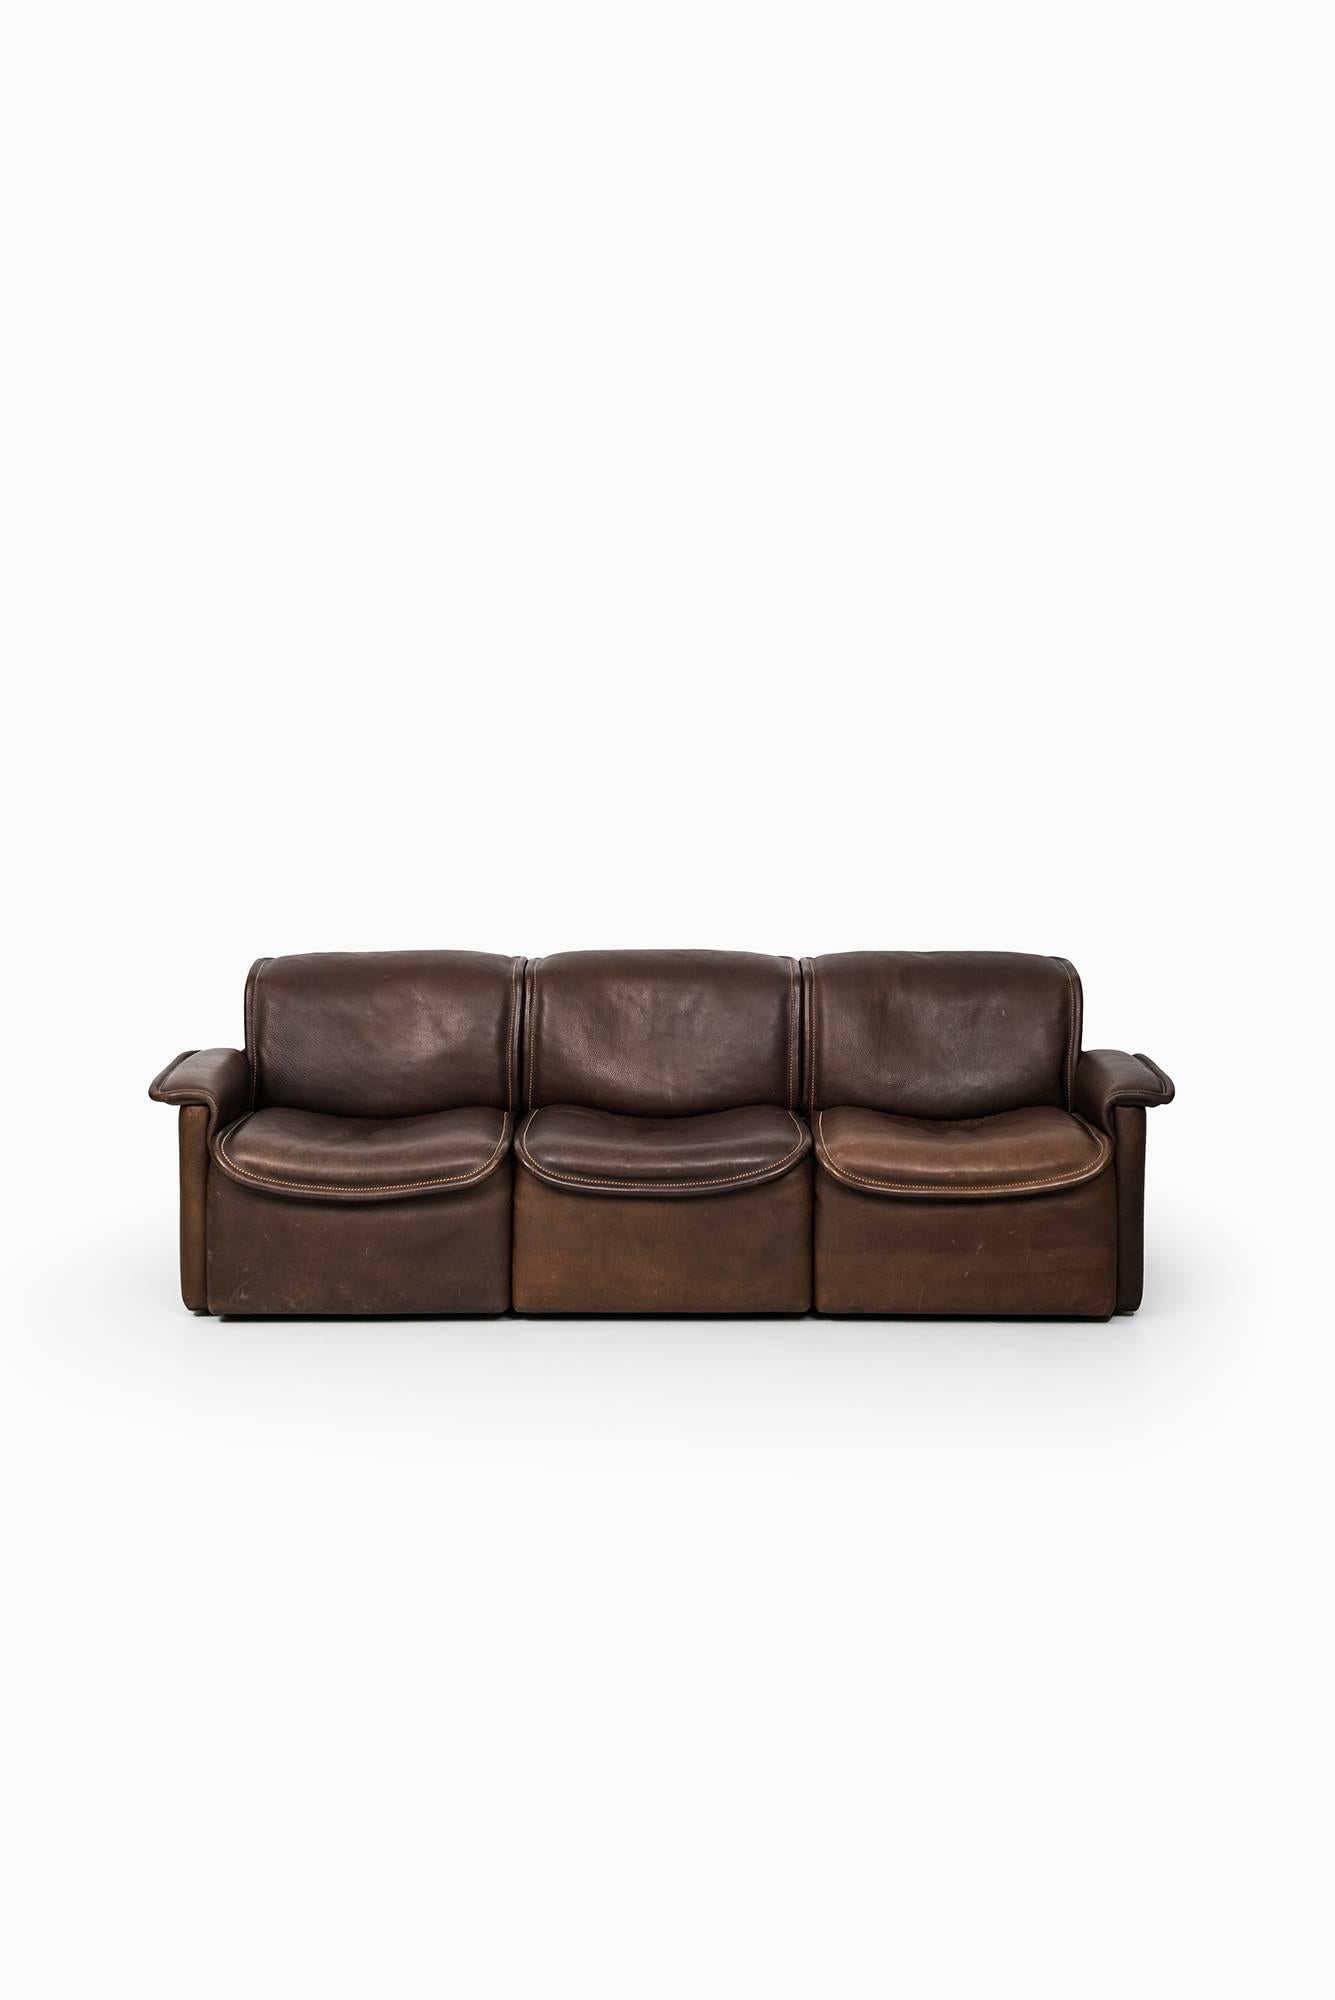 Mid-Century Modern De Sede Three-Seat Sofa Model DS-12 by De Sede in Switzerland